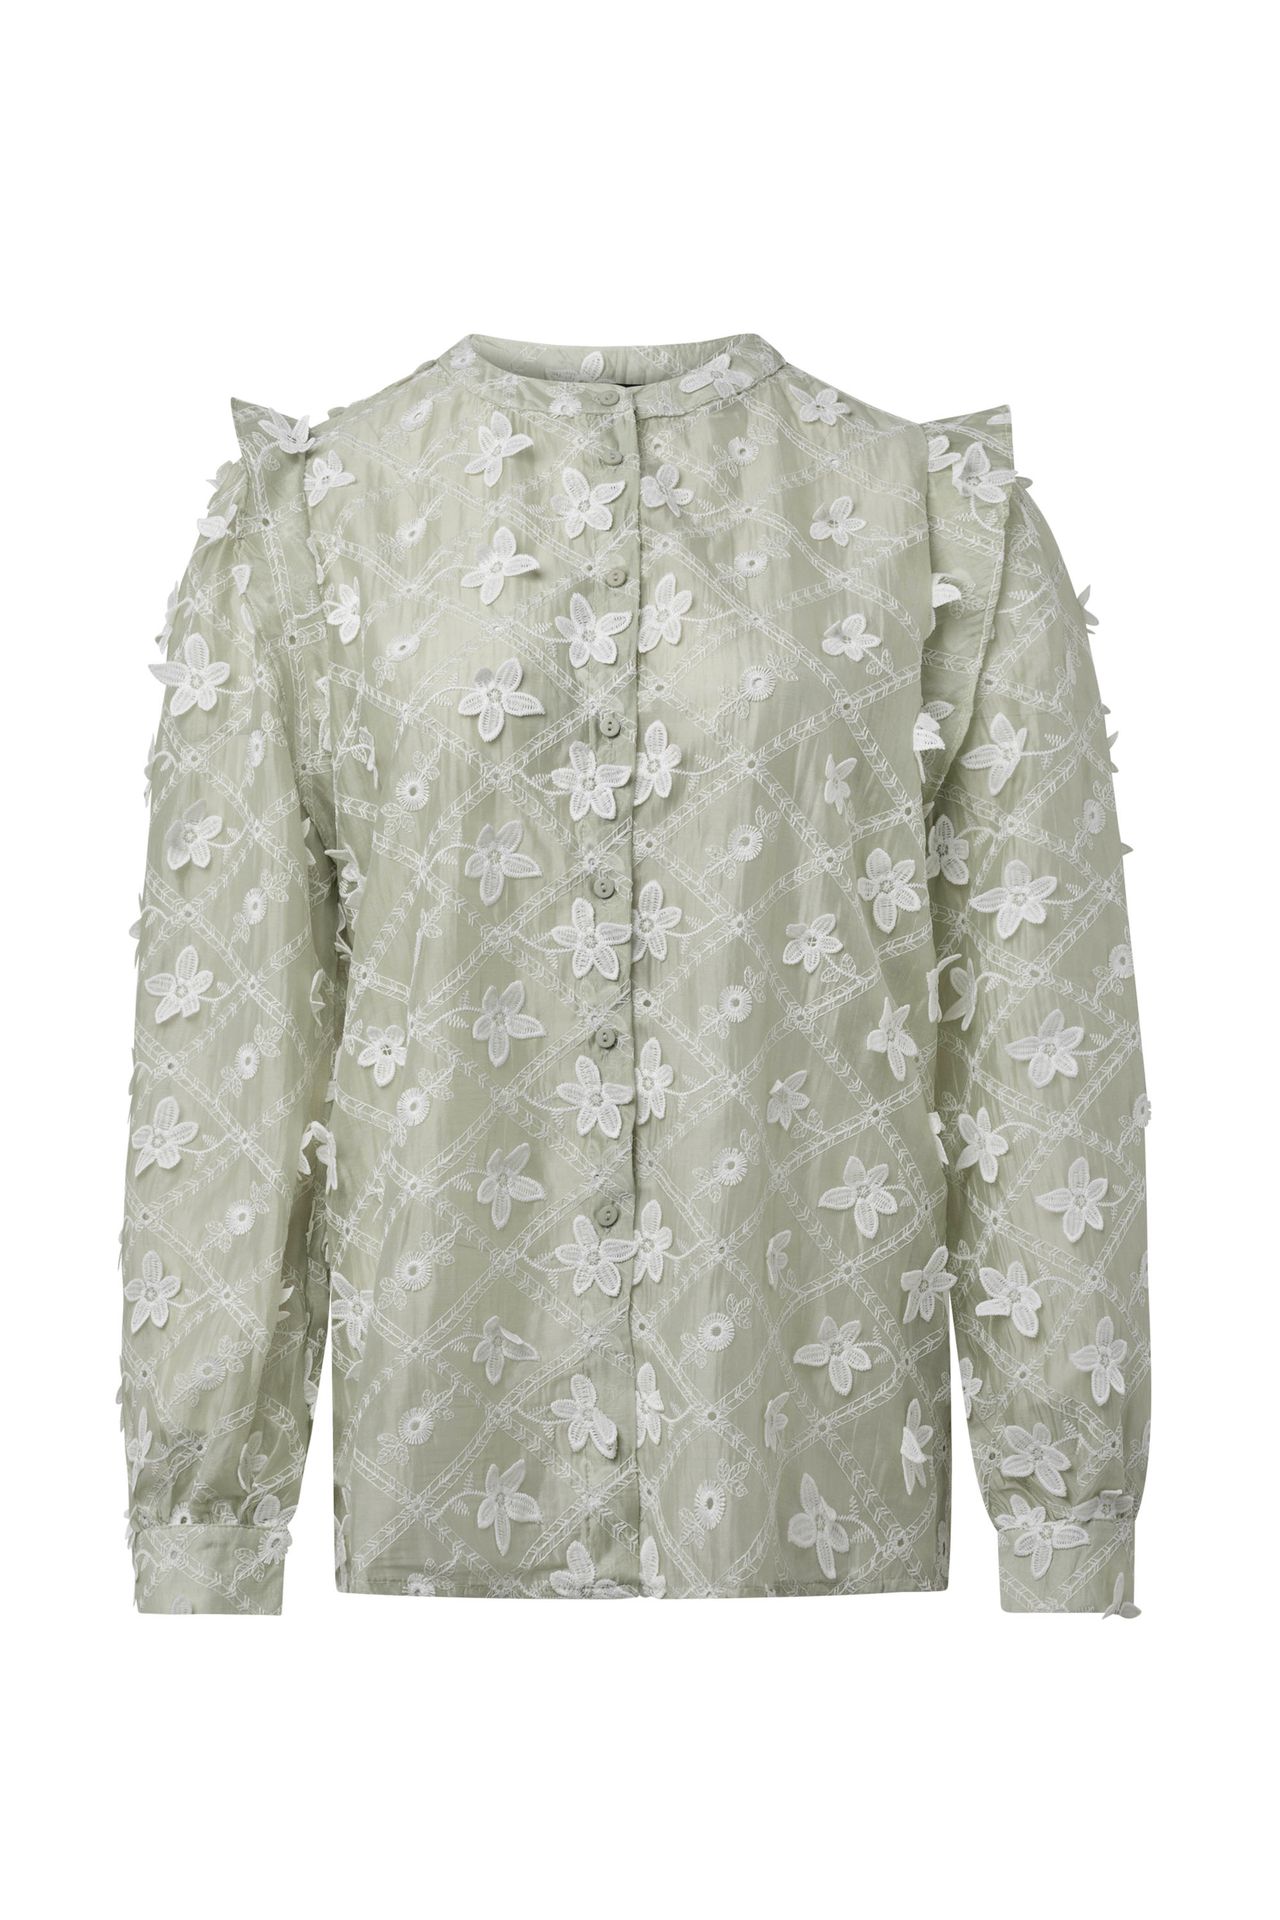  Mintgroene blouse green/white 214448-531-46